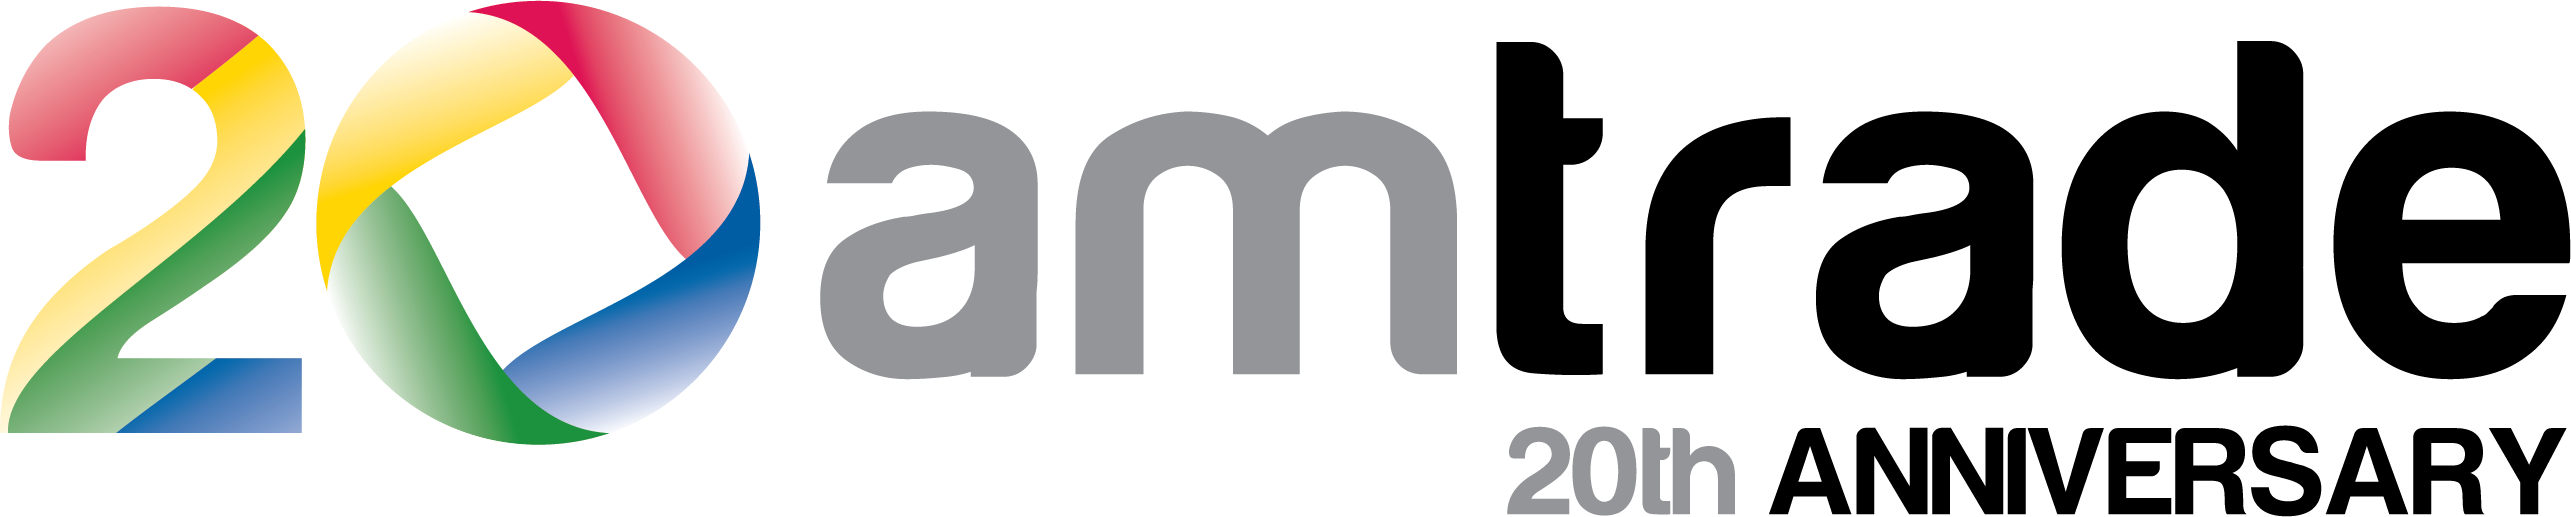 AmTrade Systems 20th Anniversary Logo